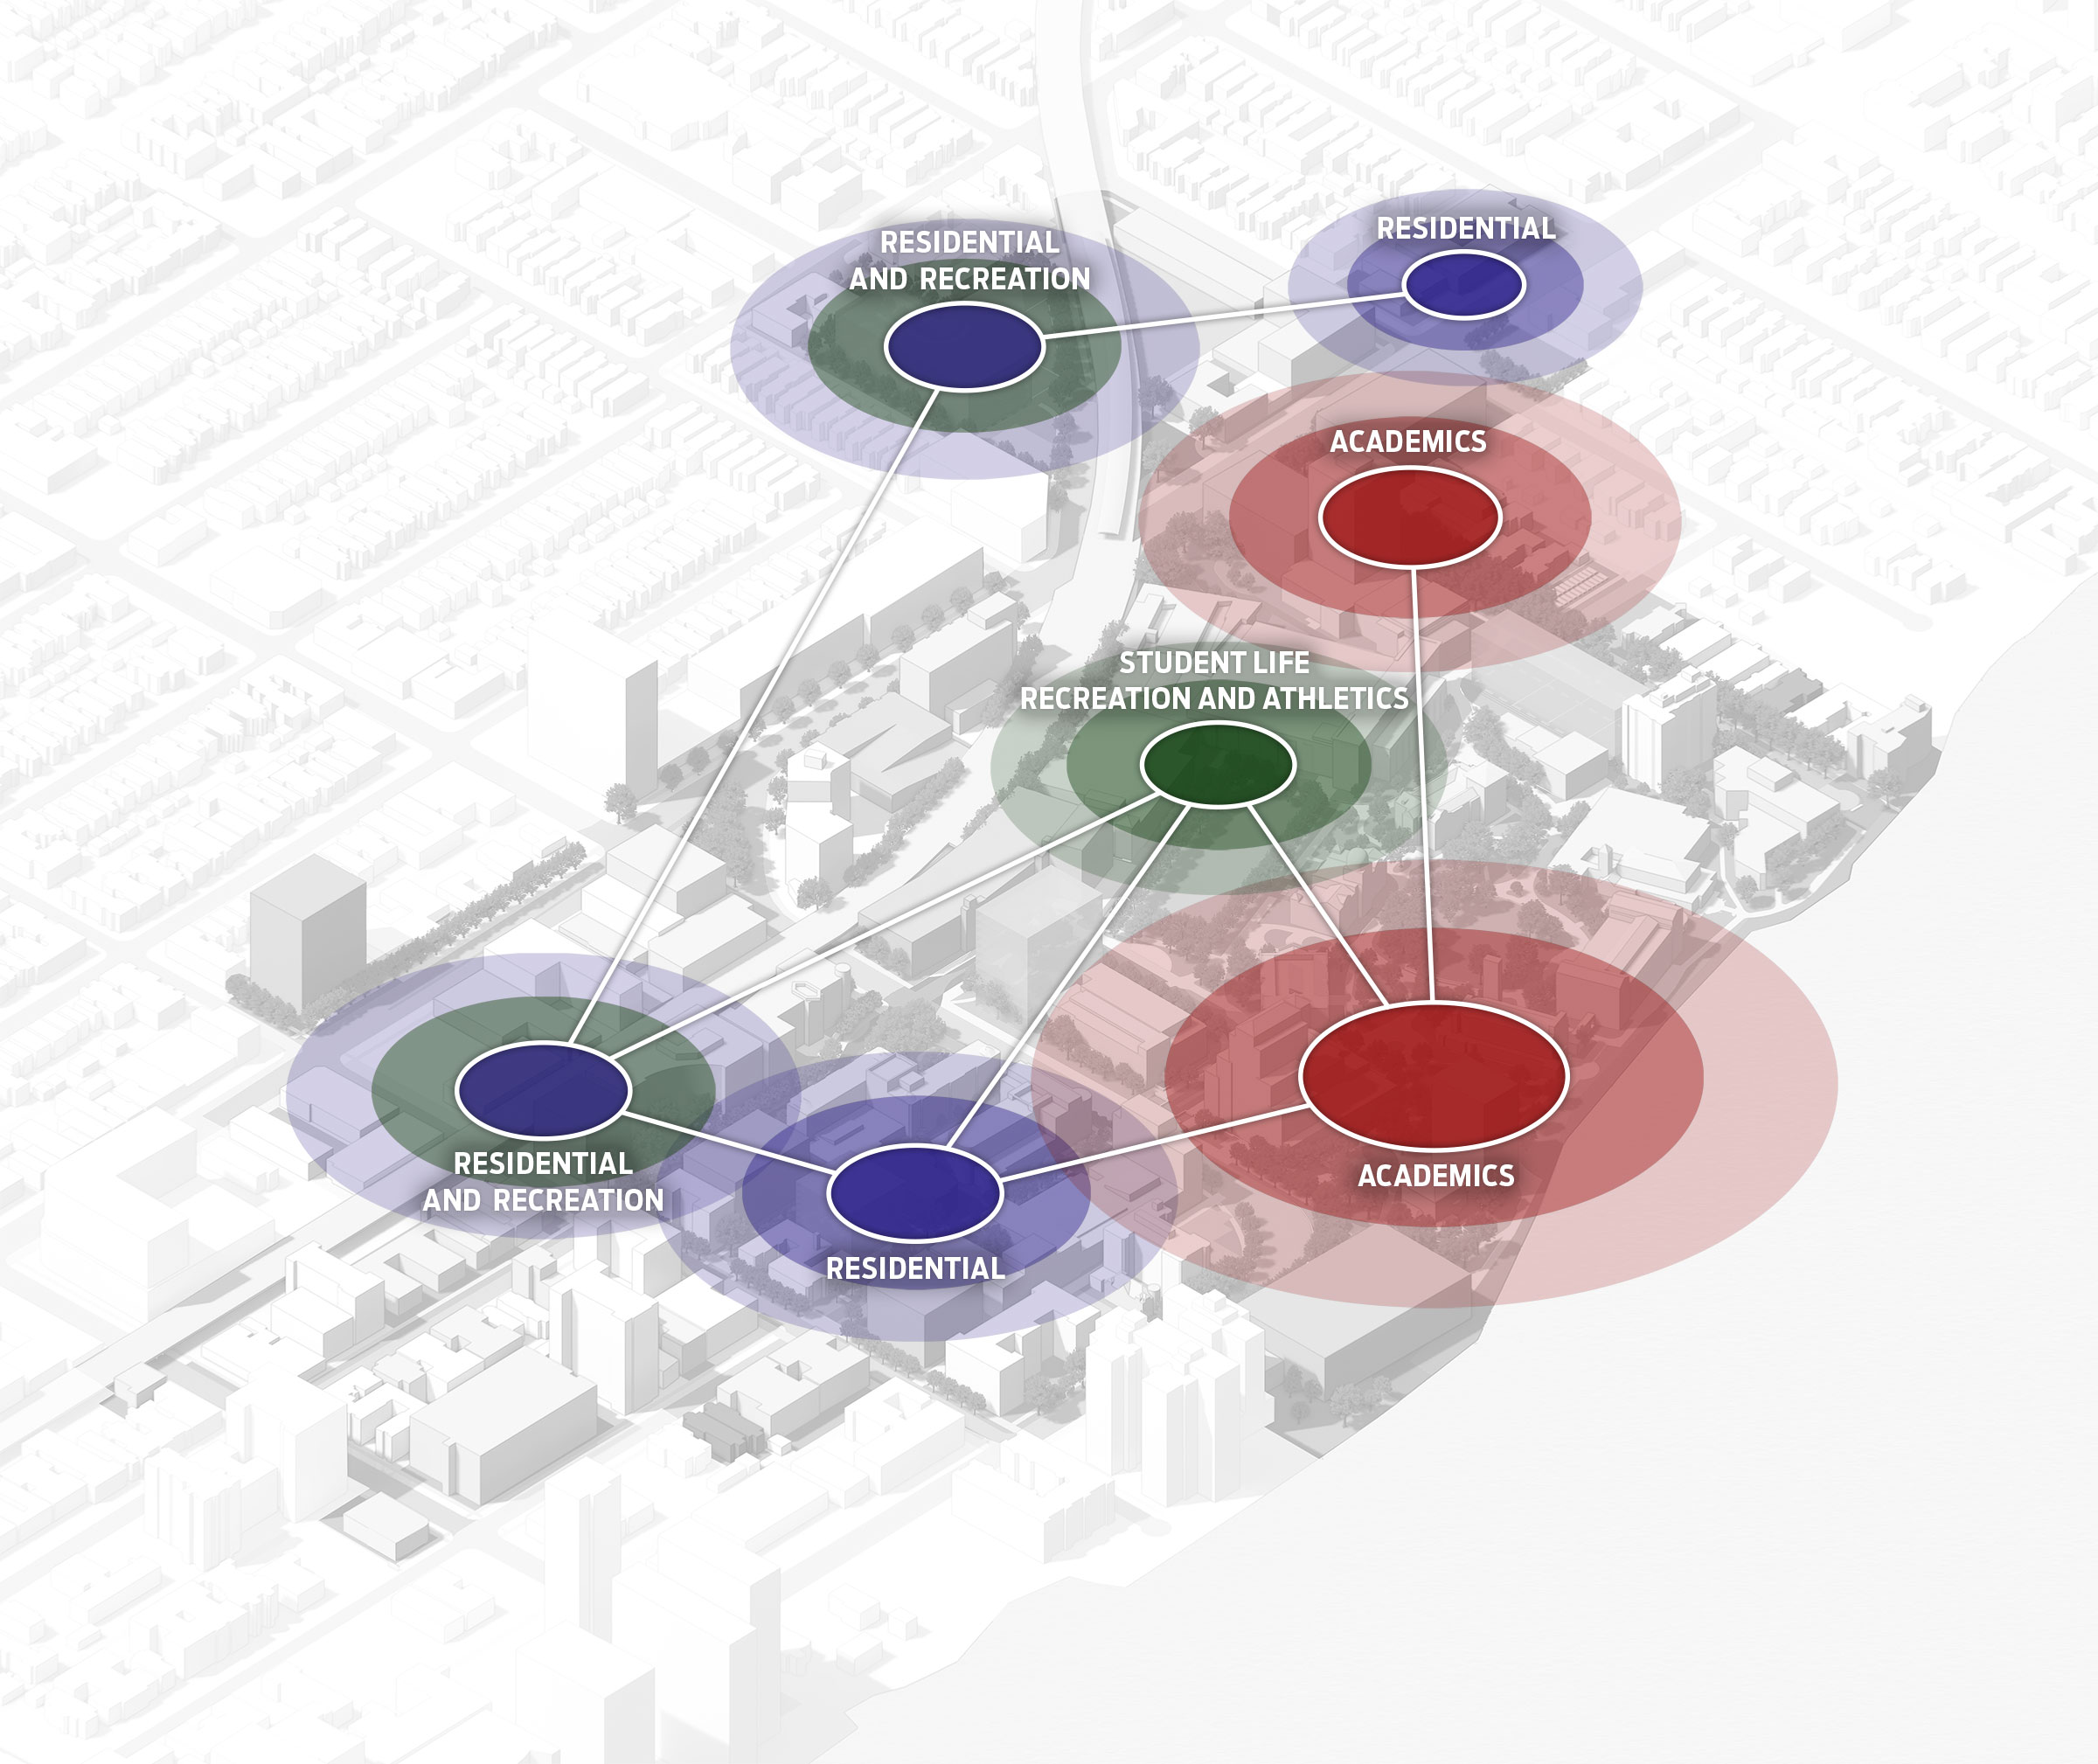 Campus Master Plan map displays strategic zones